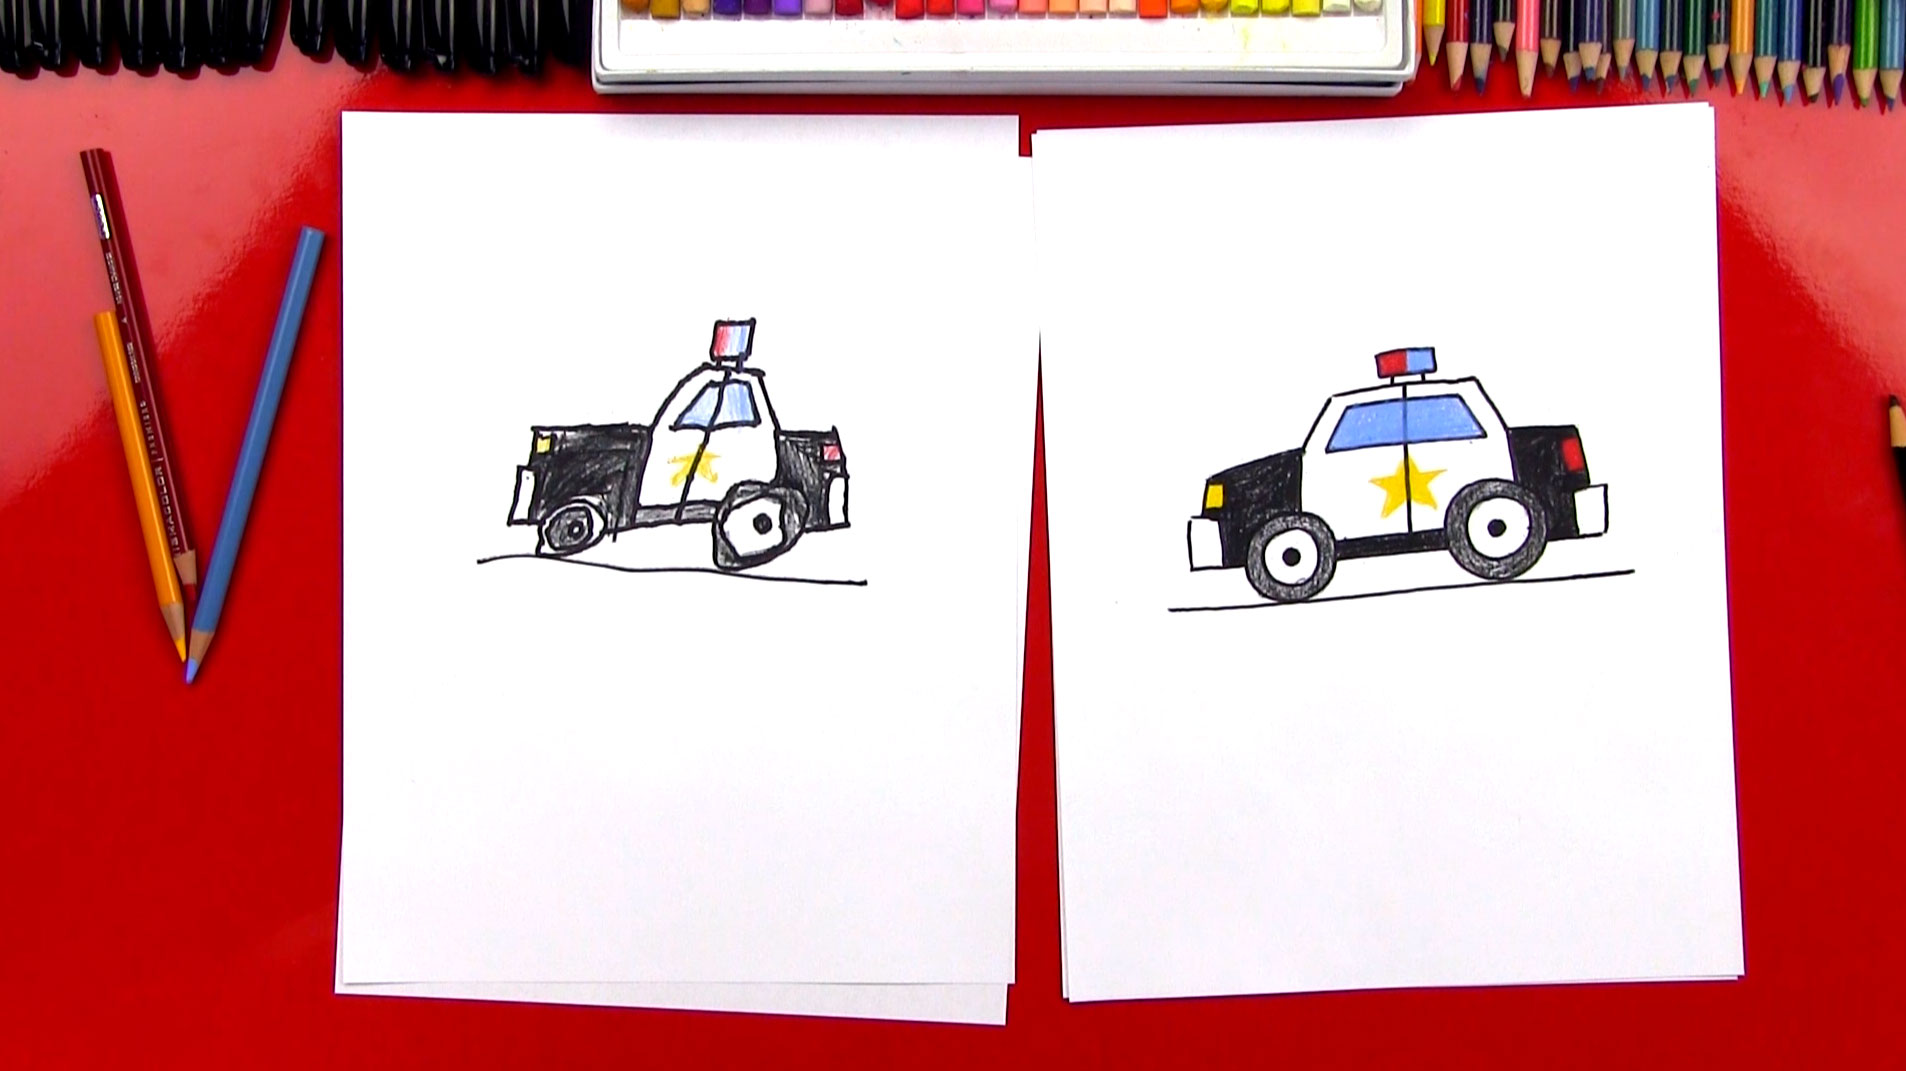 draw cartoon police